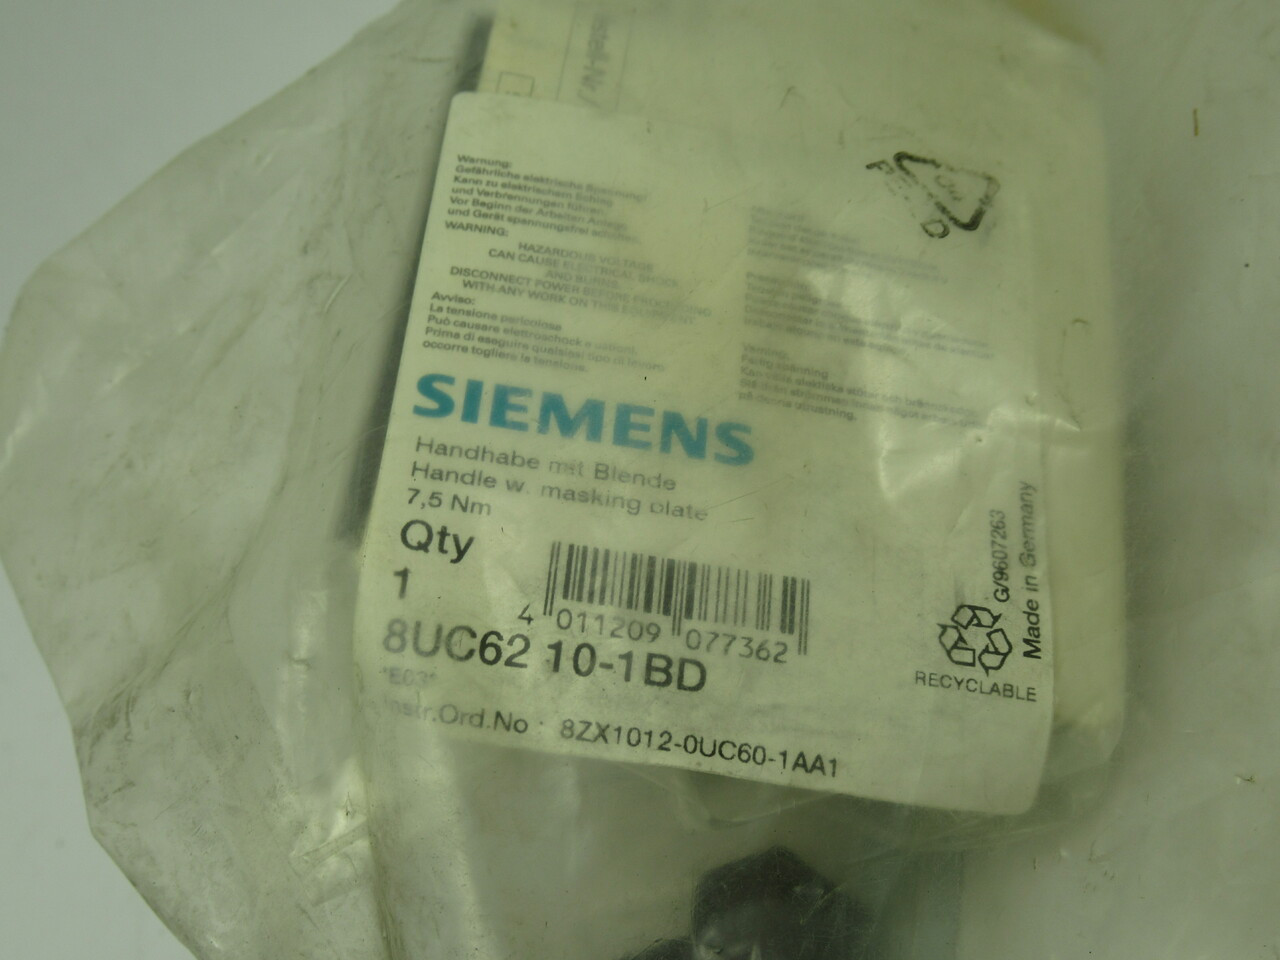 Siemens 8UC6210-1BD Rotary Drive Mechanism Handle w/ Masking Plate NWB